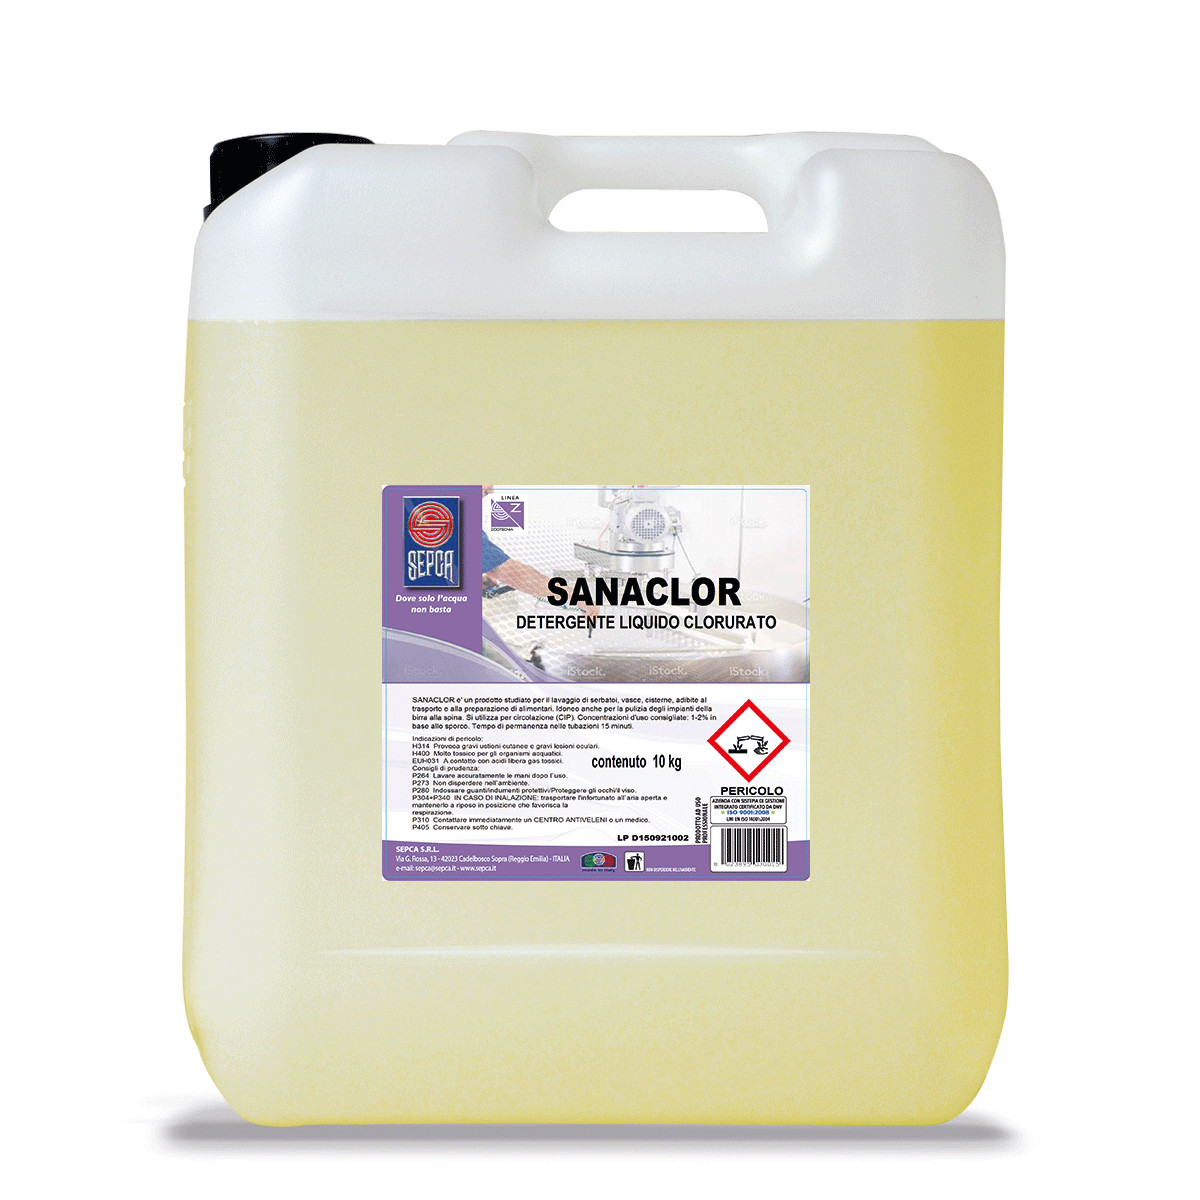 Sanaclor detergente clorurato